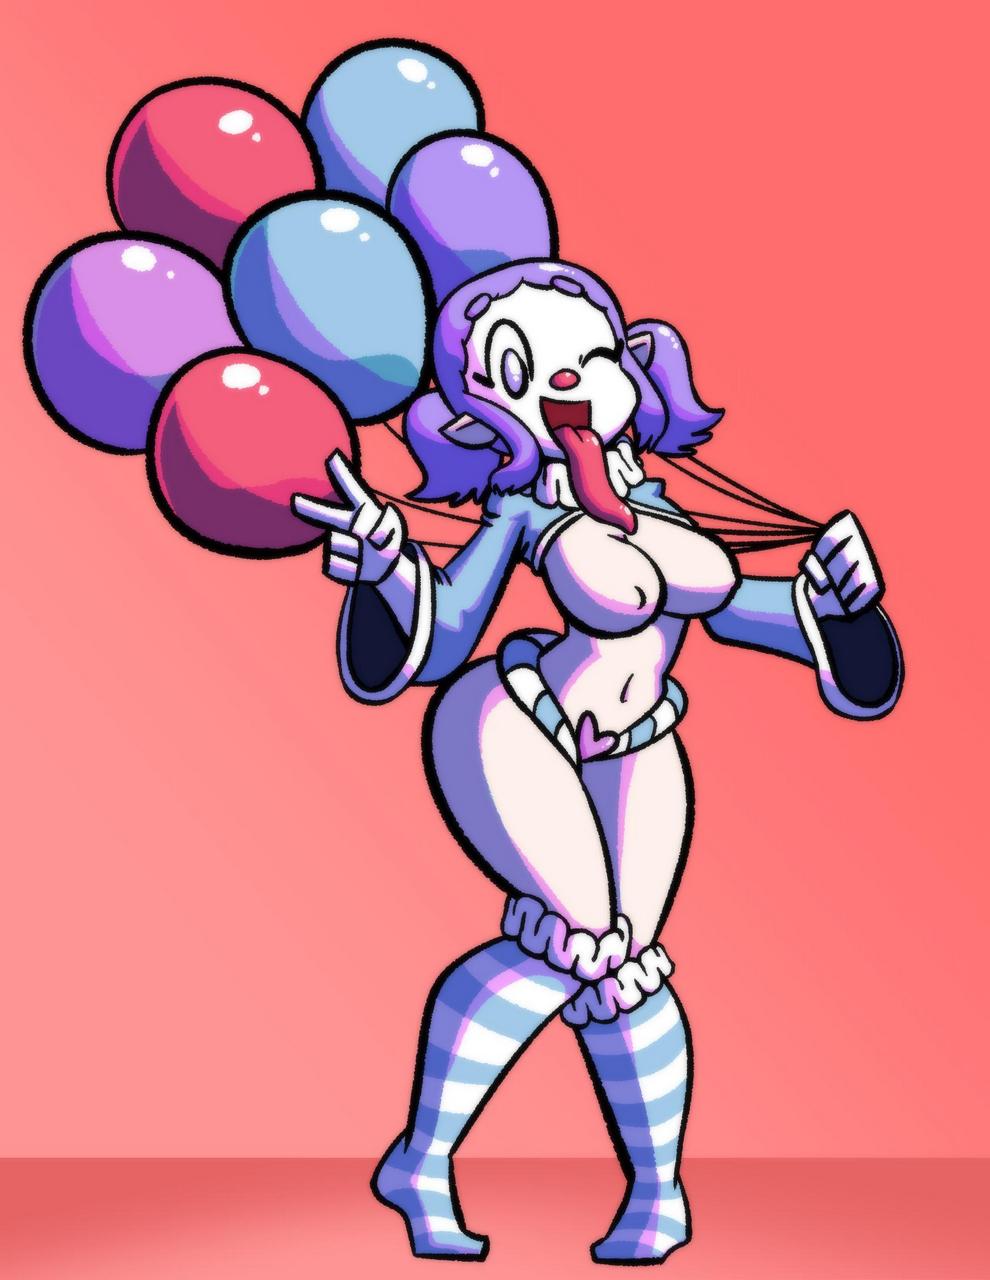 Carla The Clown Succubus By Yopycm